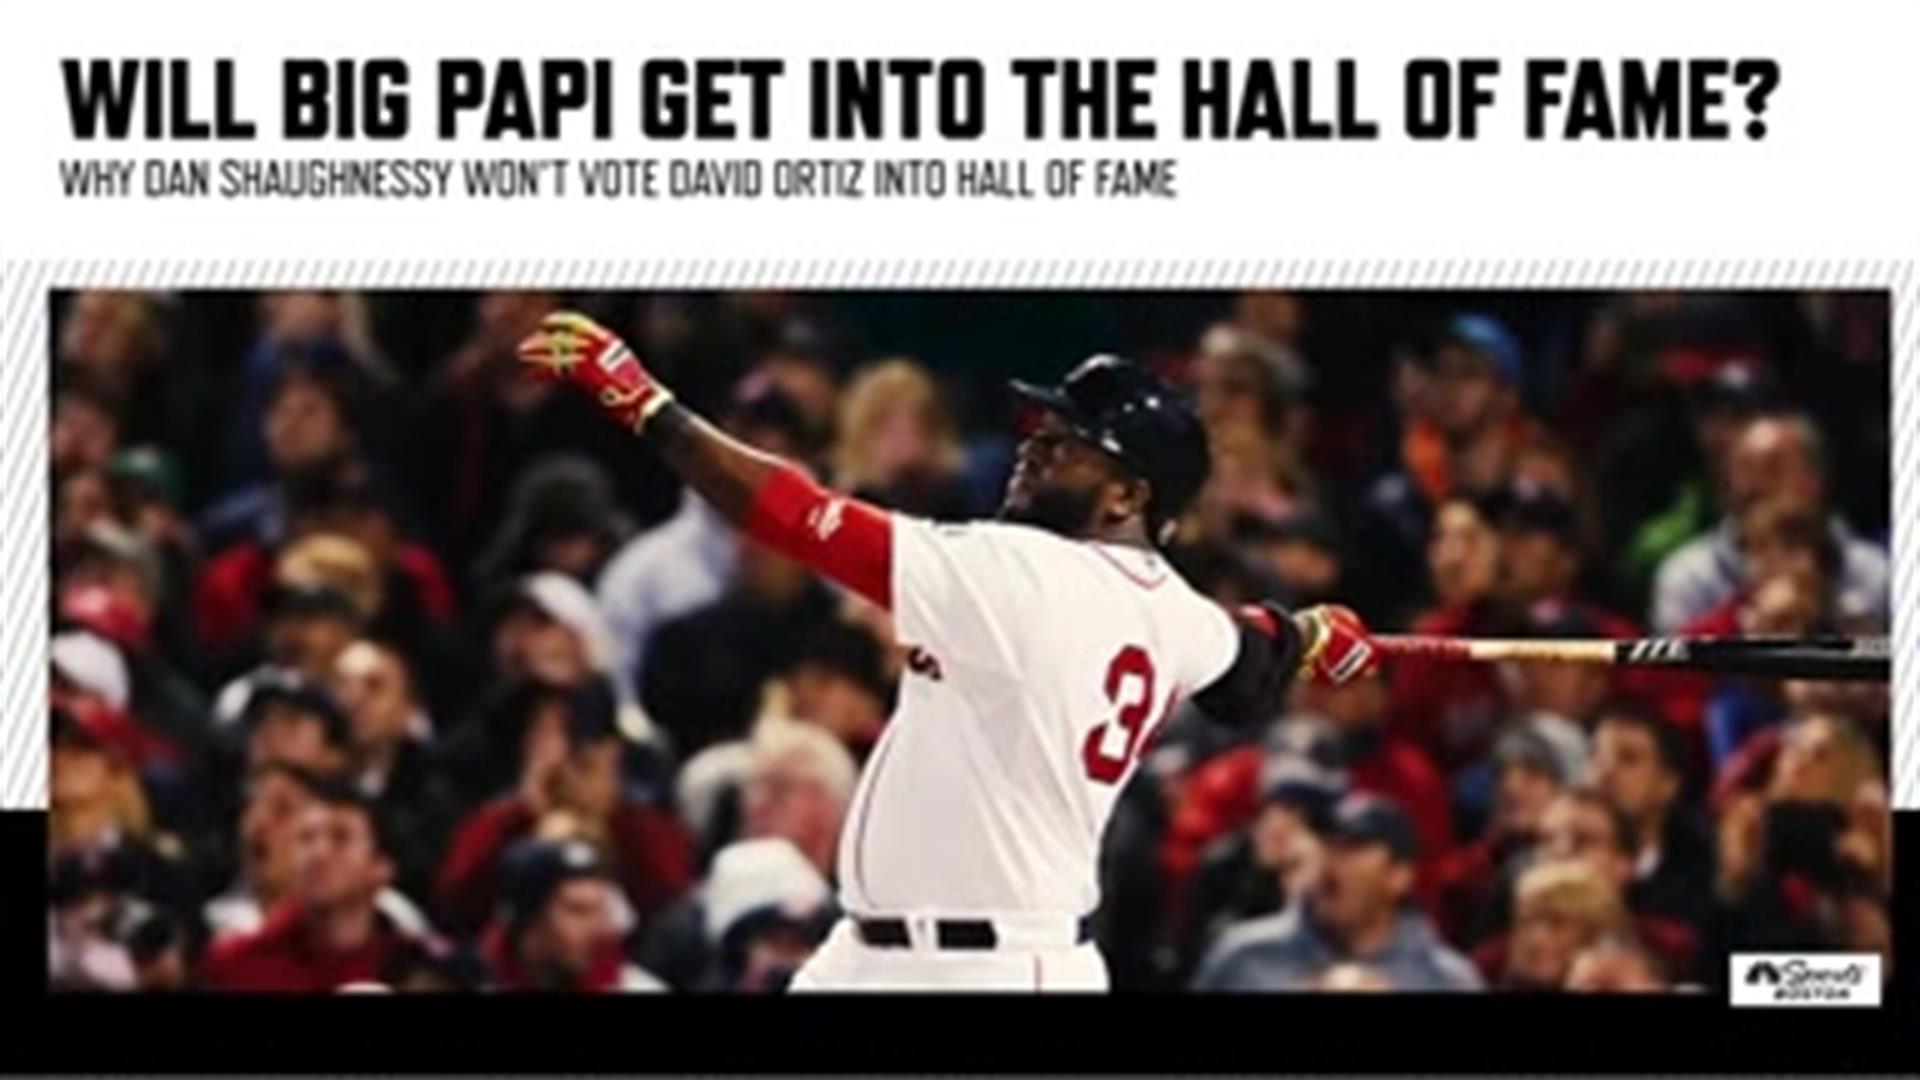 MLB: Red Sox legend David Ortiz to headline Hall of Fame